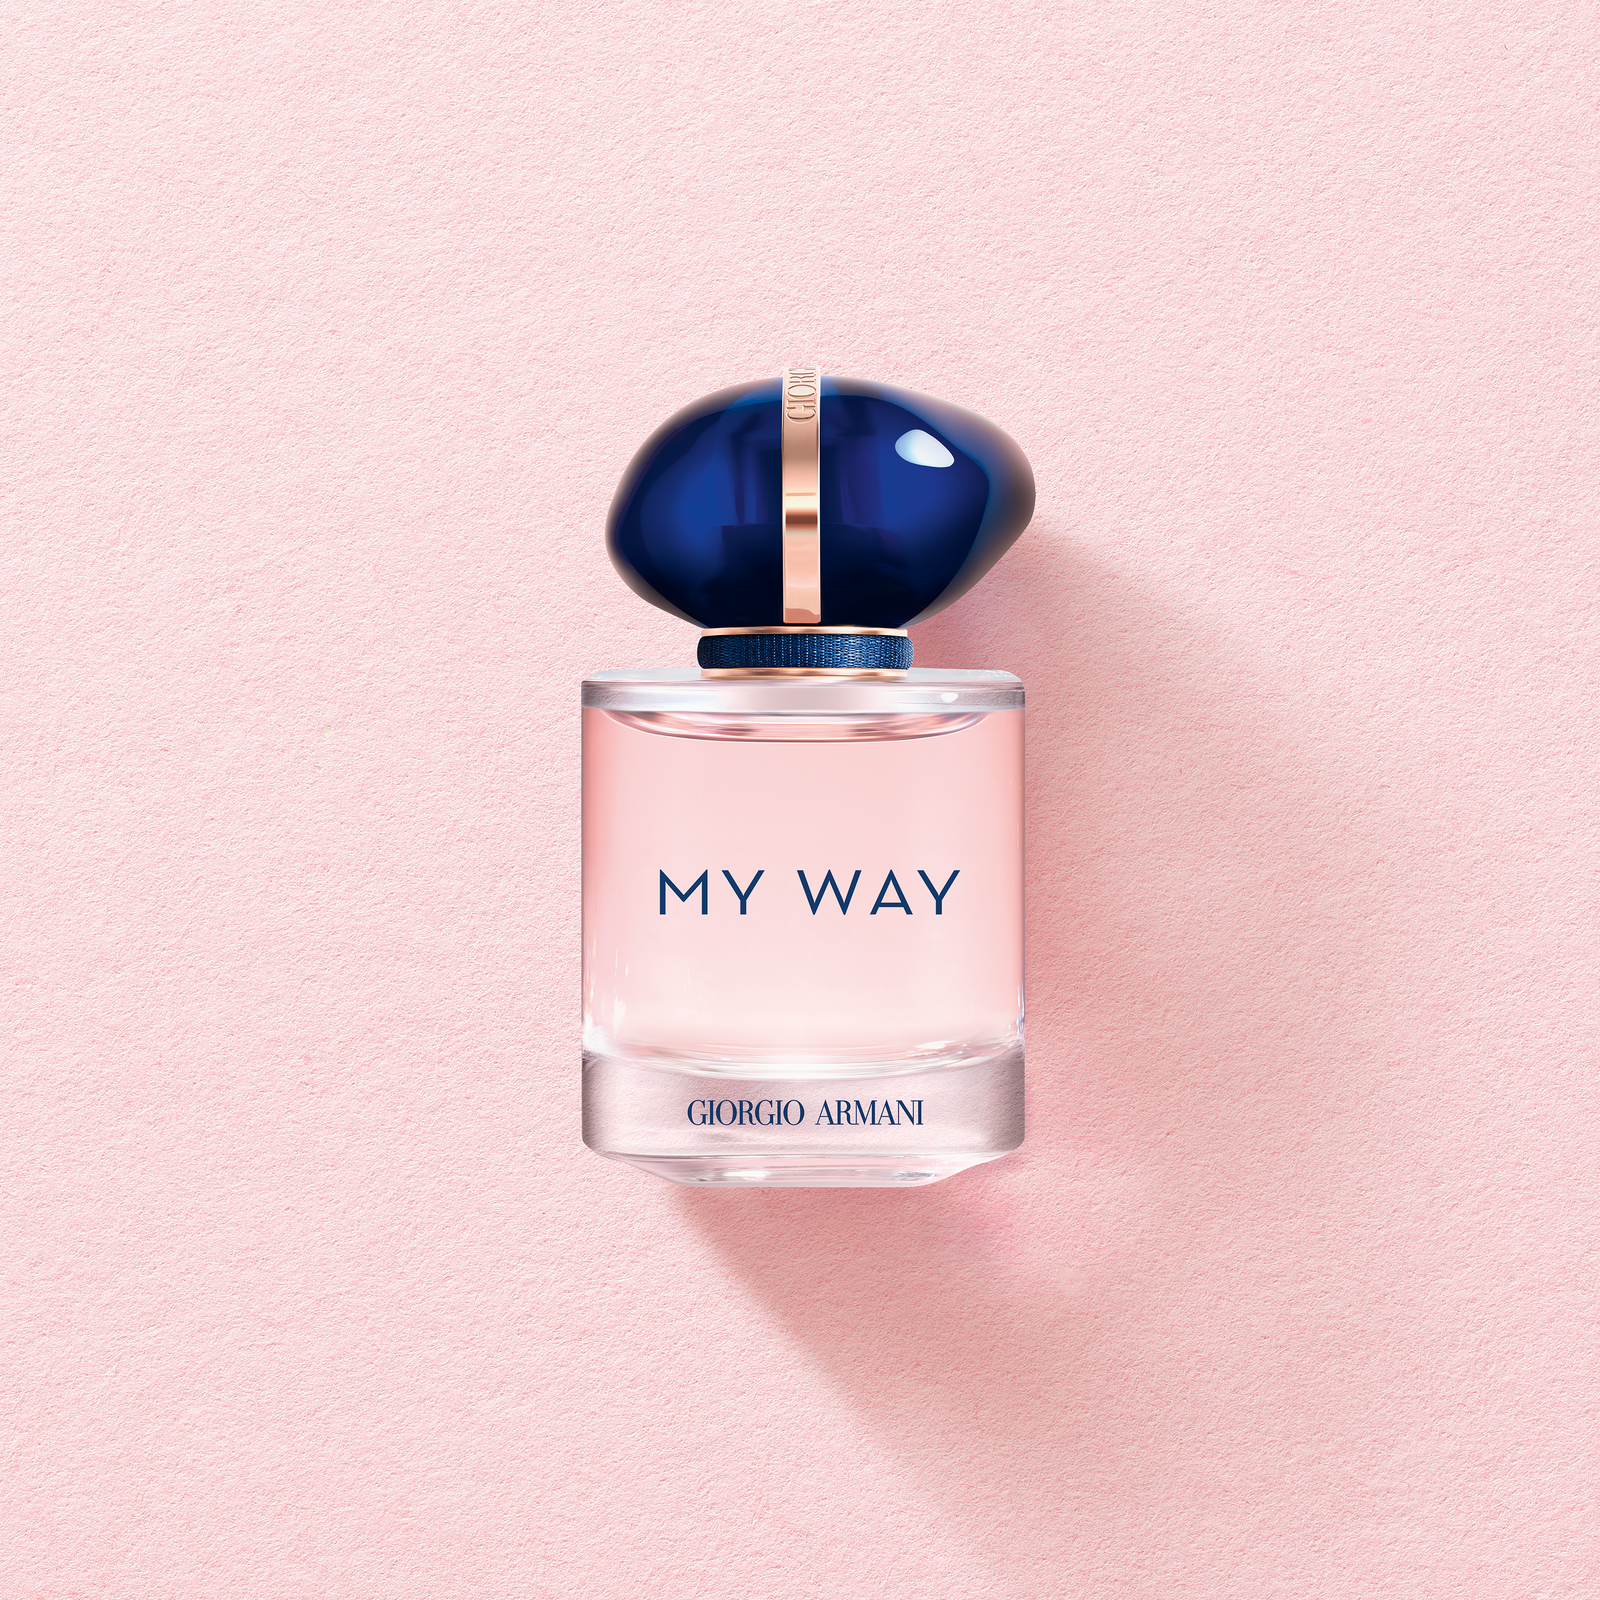 My Way новый аромат от Giorgio Armani